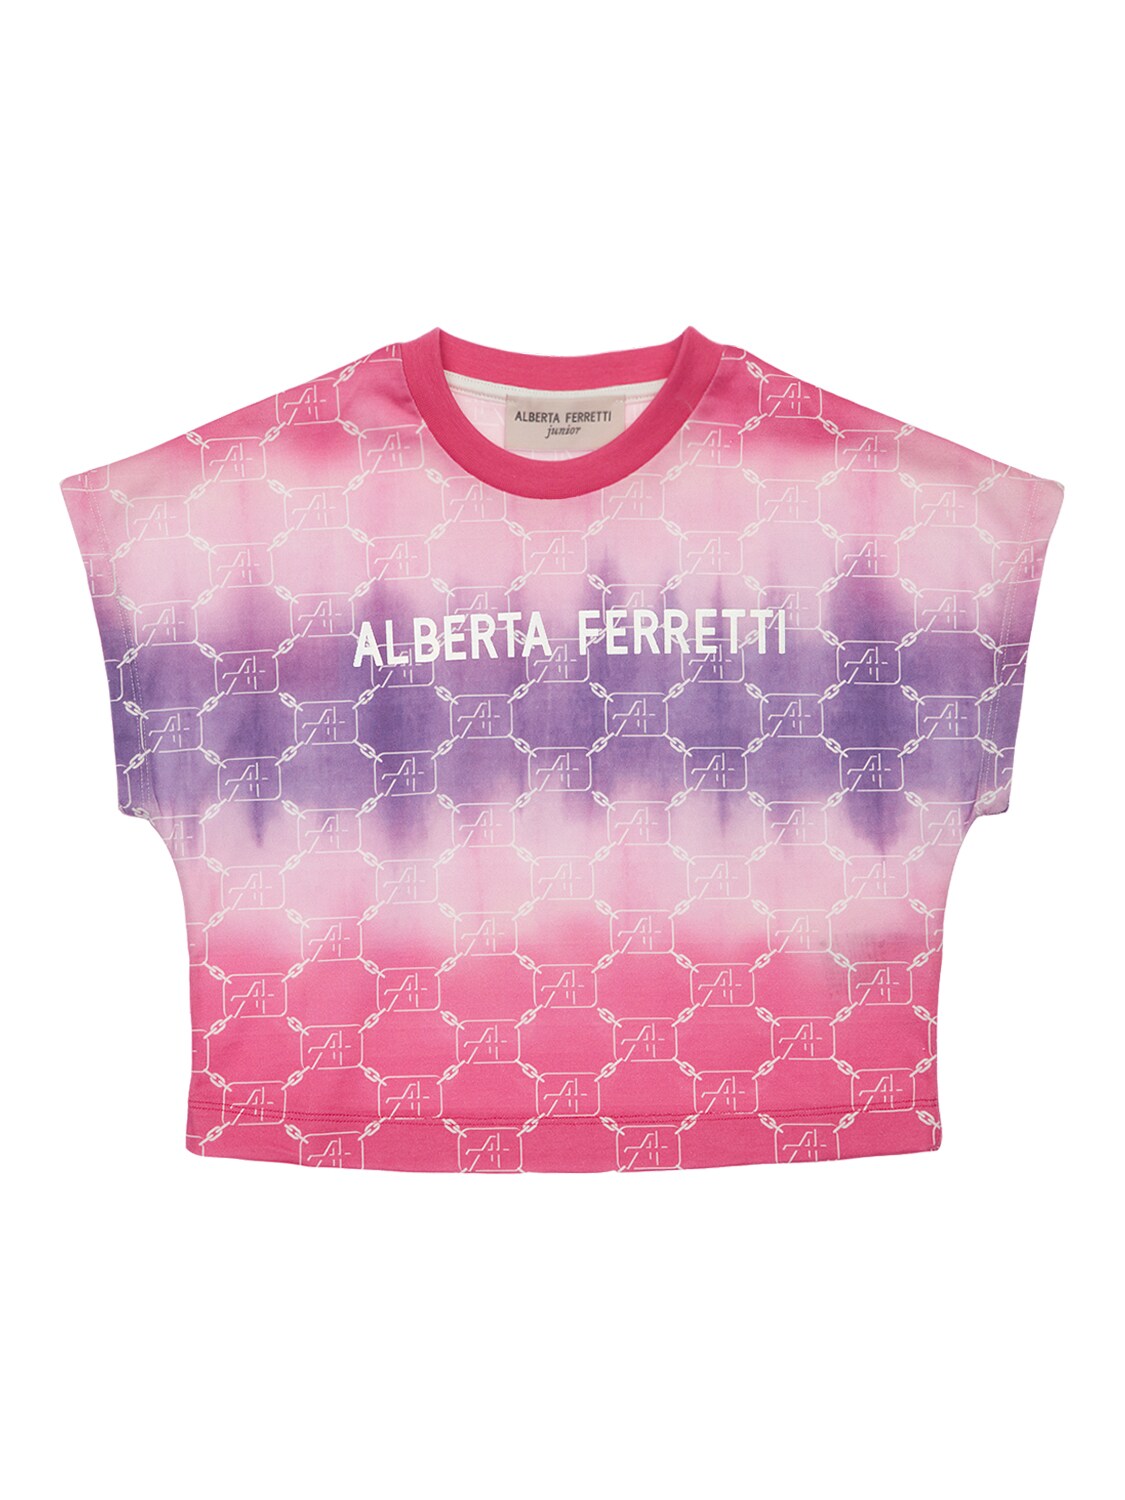 Alberta Ferretti Kids' Printed Cotton Jersey T-shirt In Pink